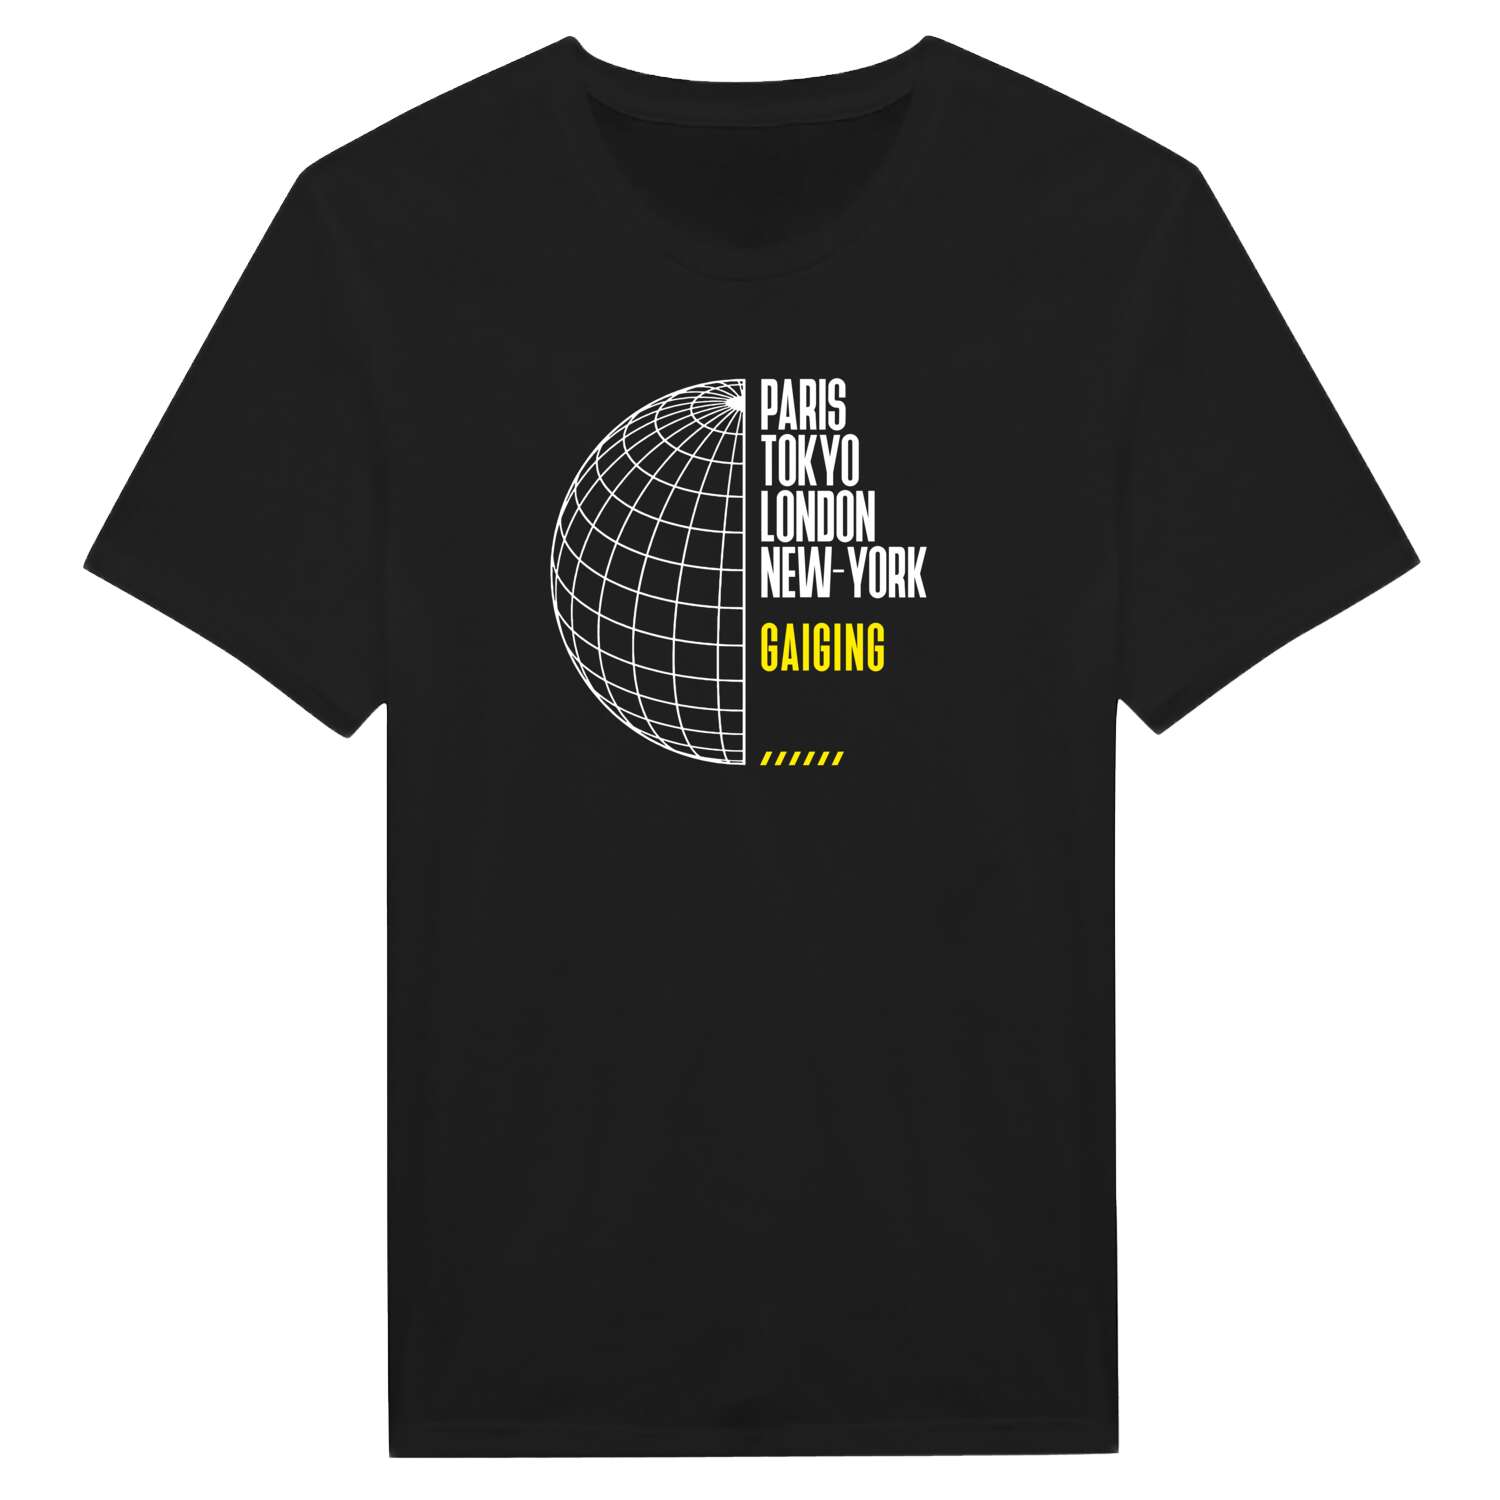 Gaiging T-Shirt »Paris Tokyo London«